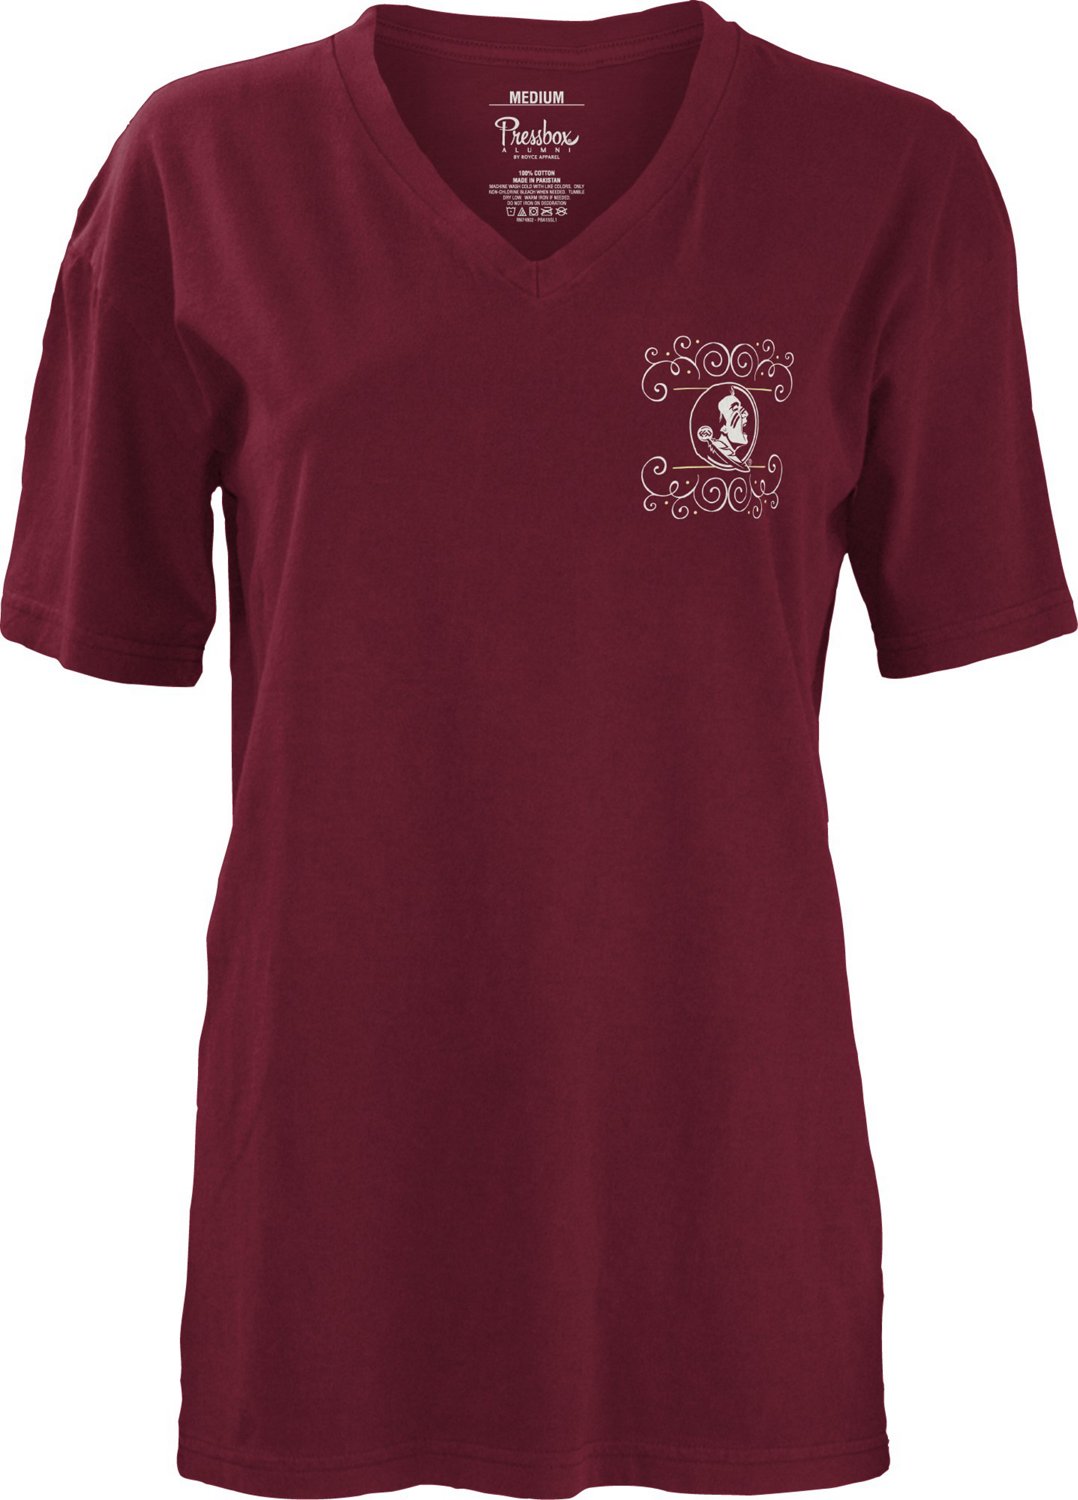 Three Square Women's Florida State University Trista Jersey T-shirt ...